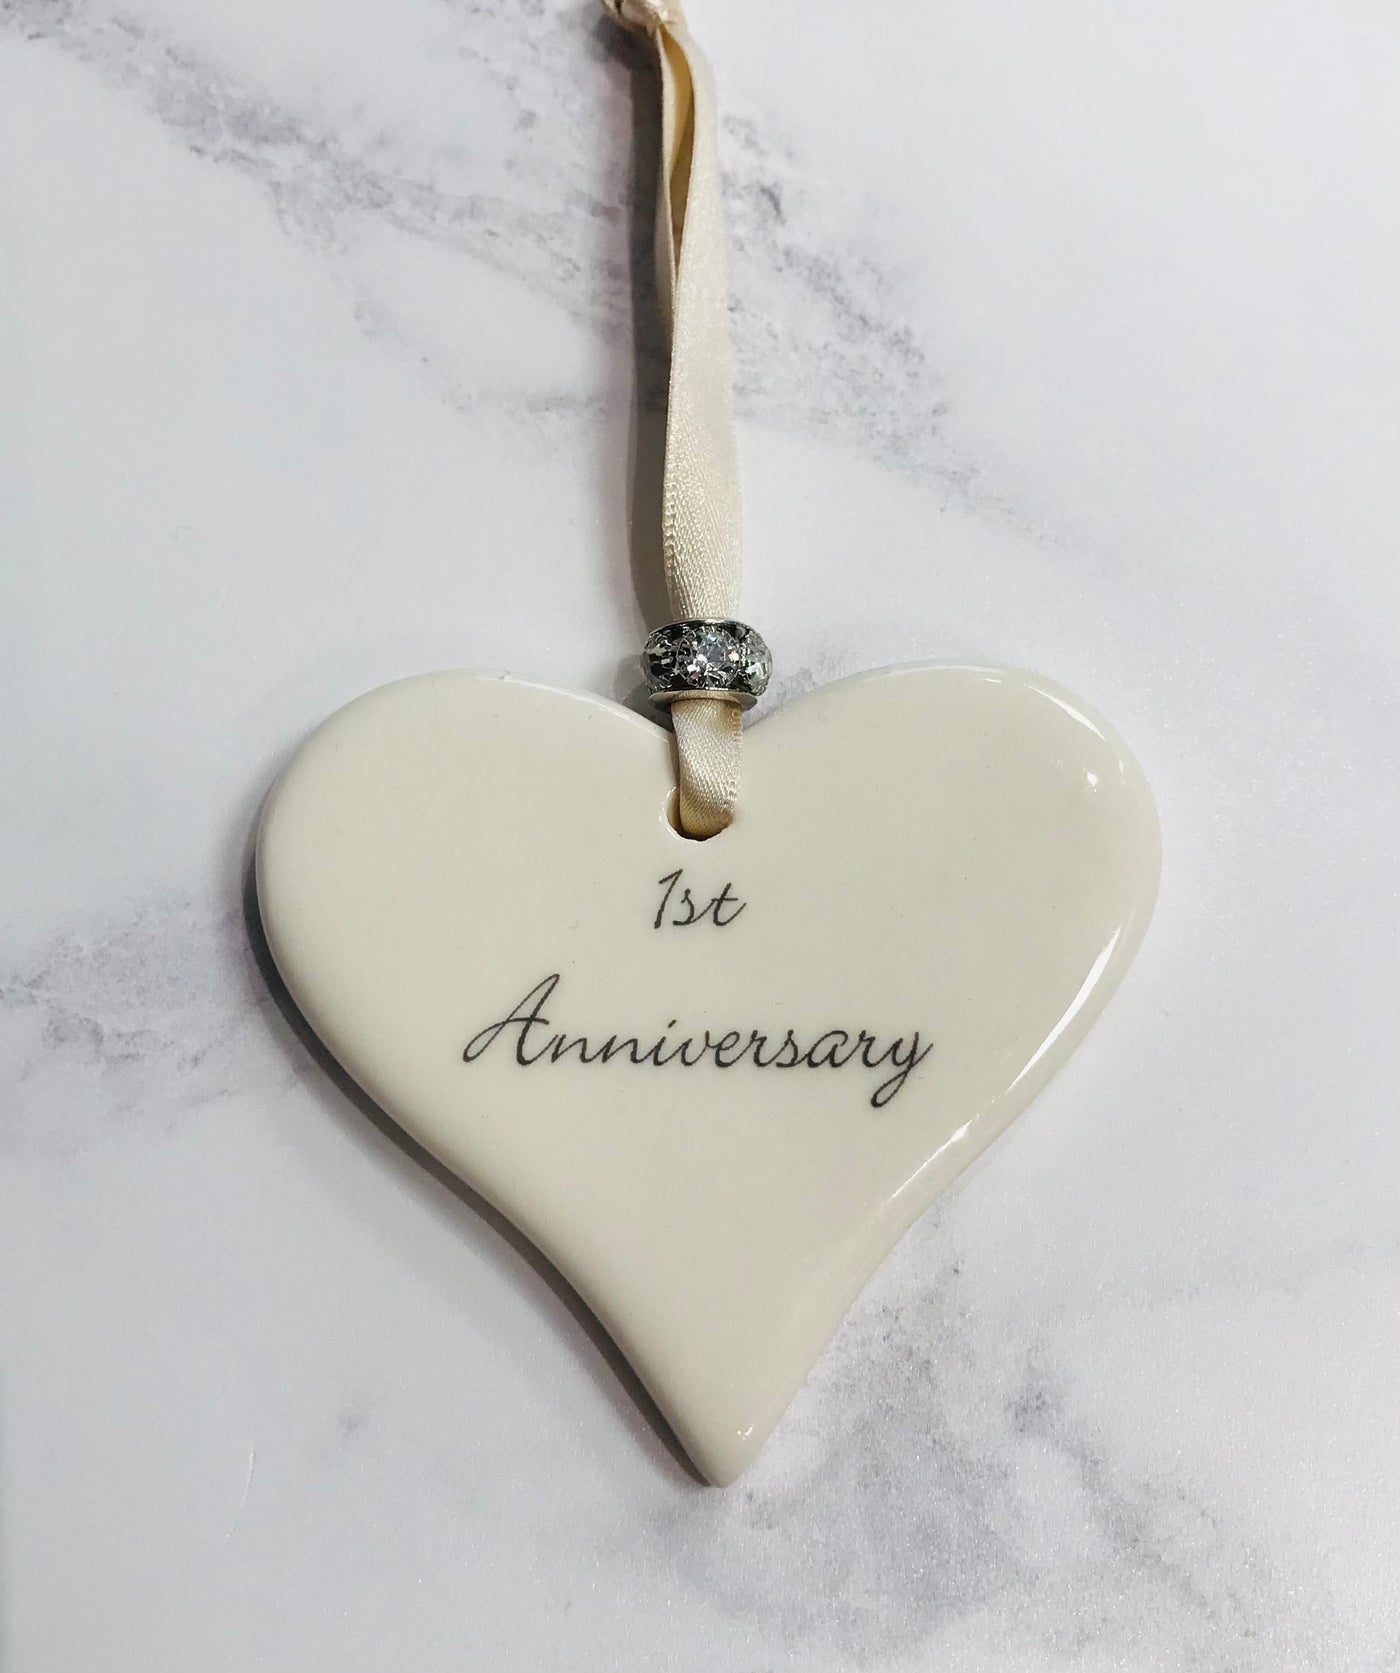 Dimbleby Ceramics Sentiment Hanging Heart - 1st Anniversary